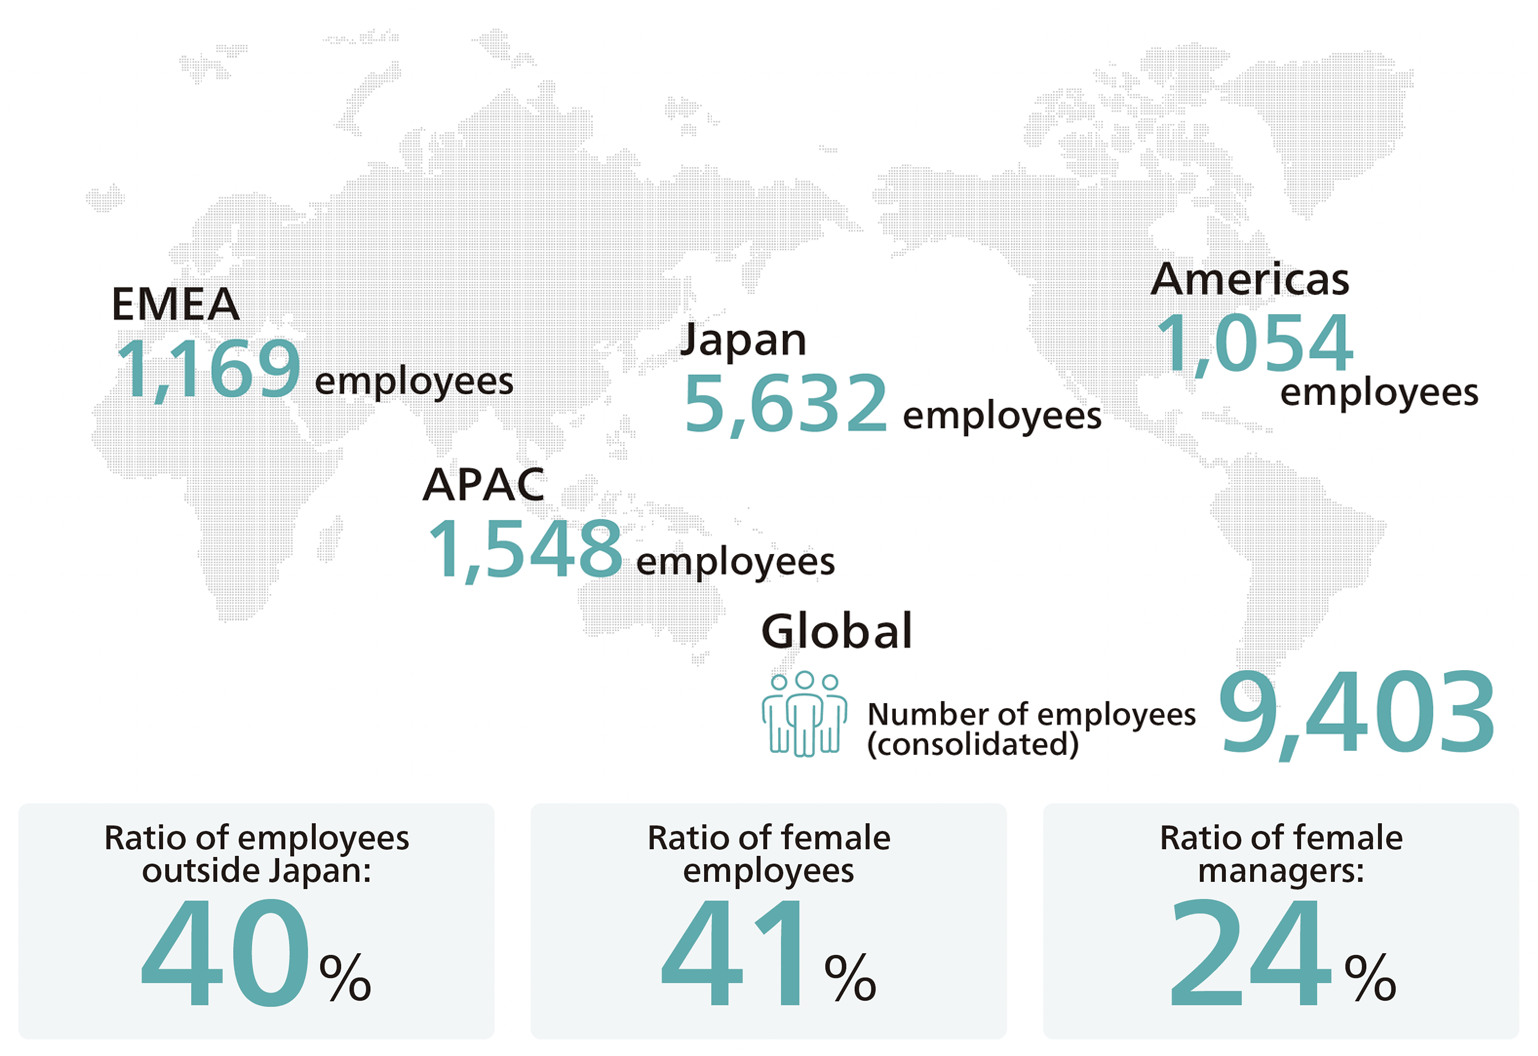 Ratio of employees outside Japan: 40% / Ratio of female employees 41% / Ratio of female managers: 24%